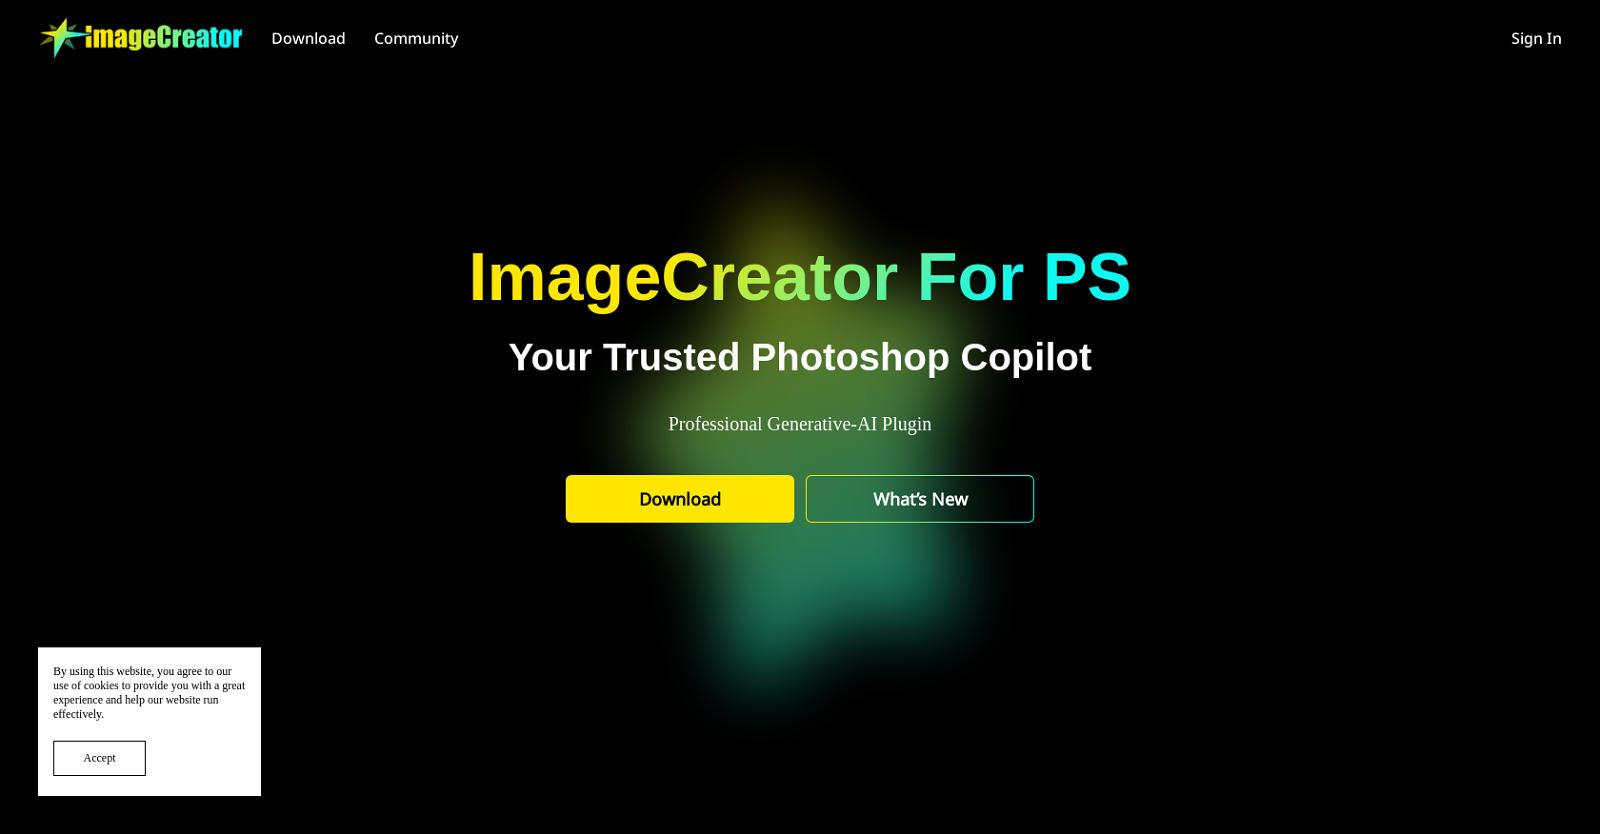 ImageCreator website